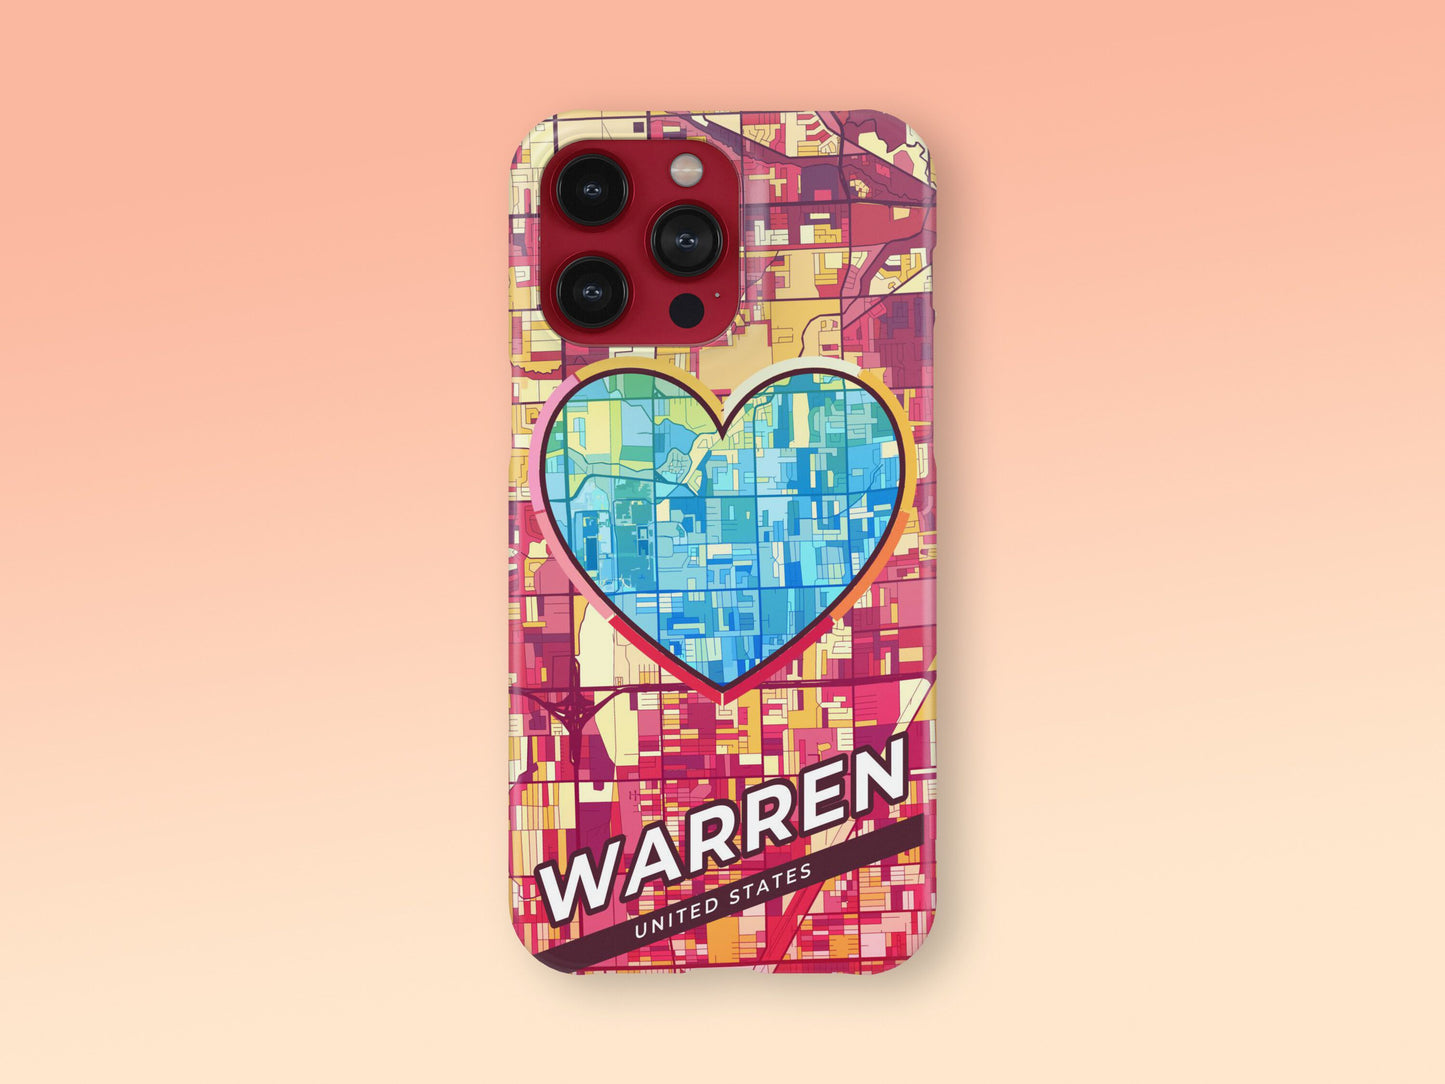 Warren Michigan slim phone case with colorful icon 2